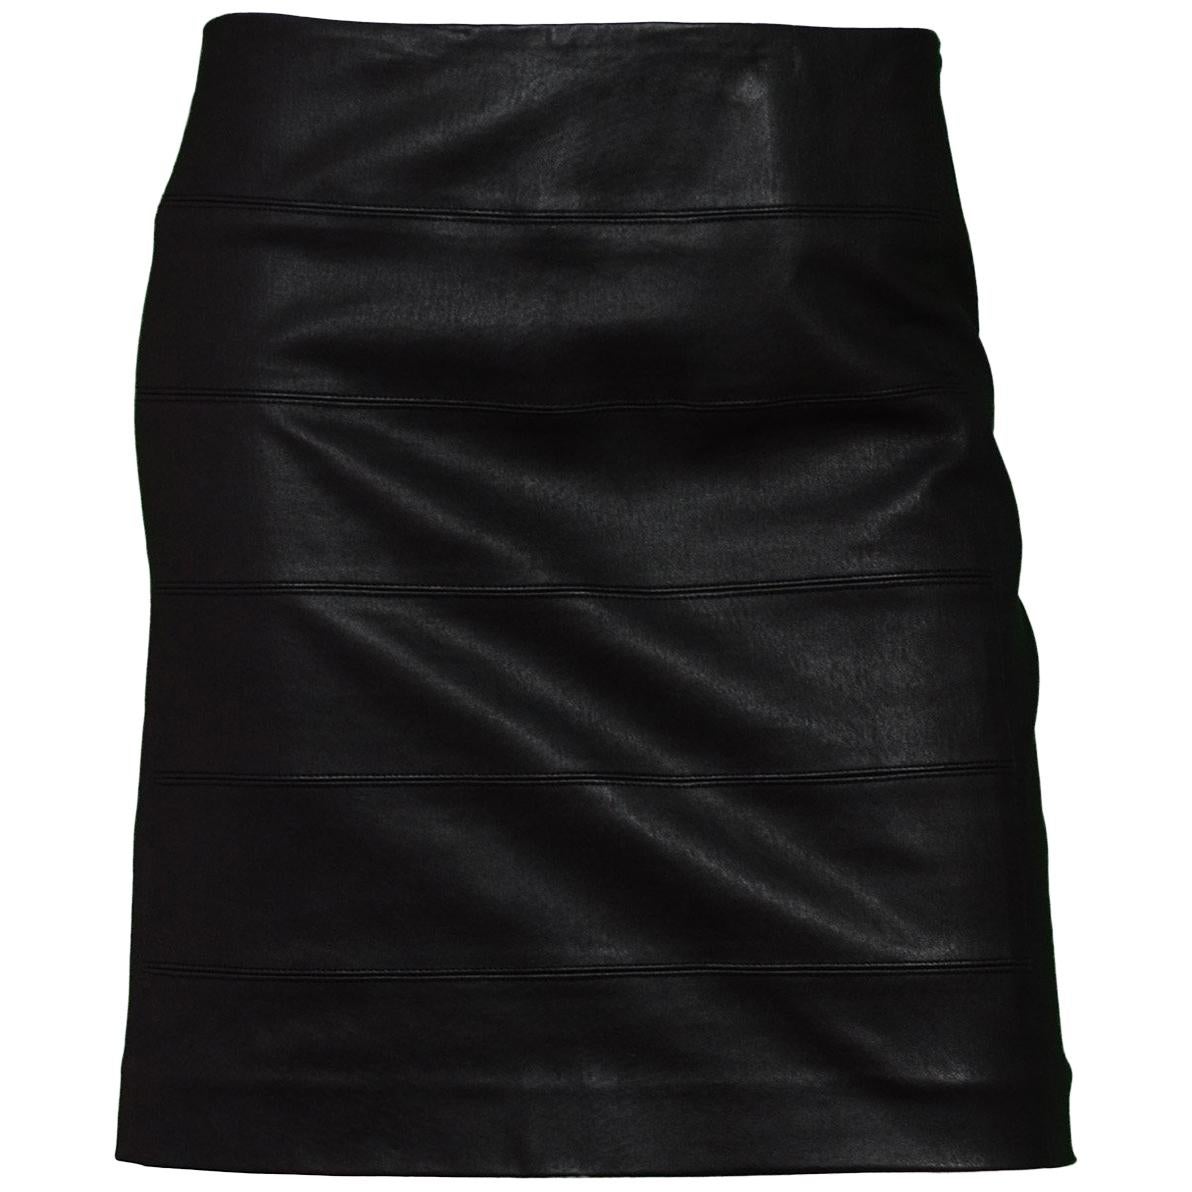 Vince Black Leather Paneled Mini Skirt Sz 6